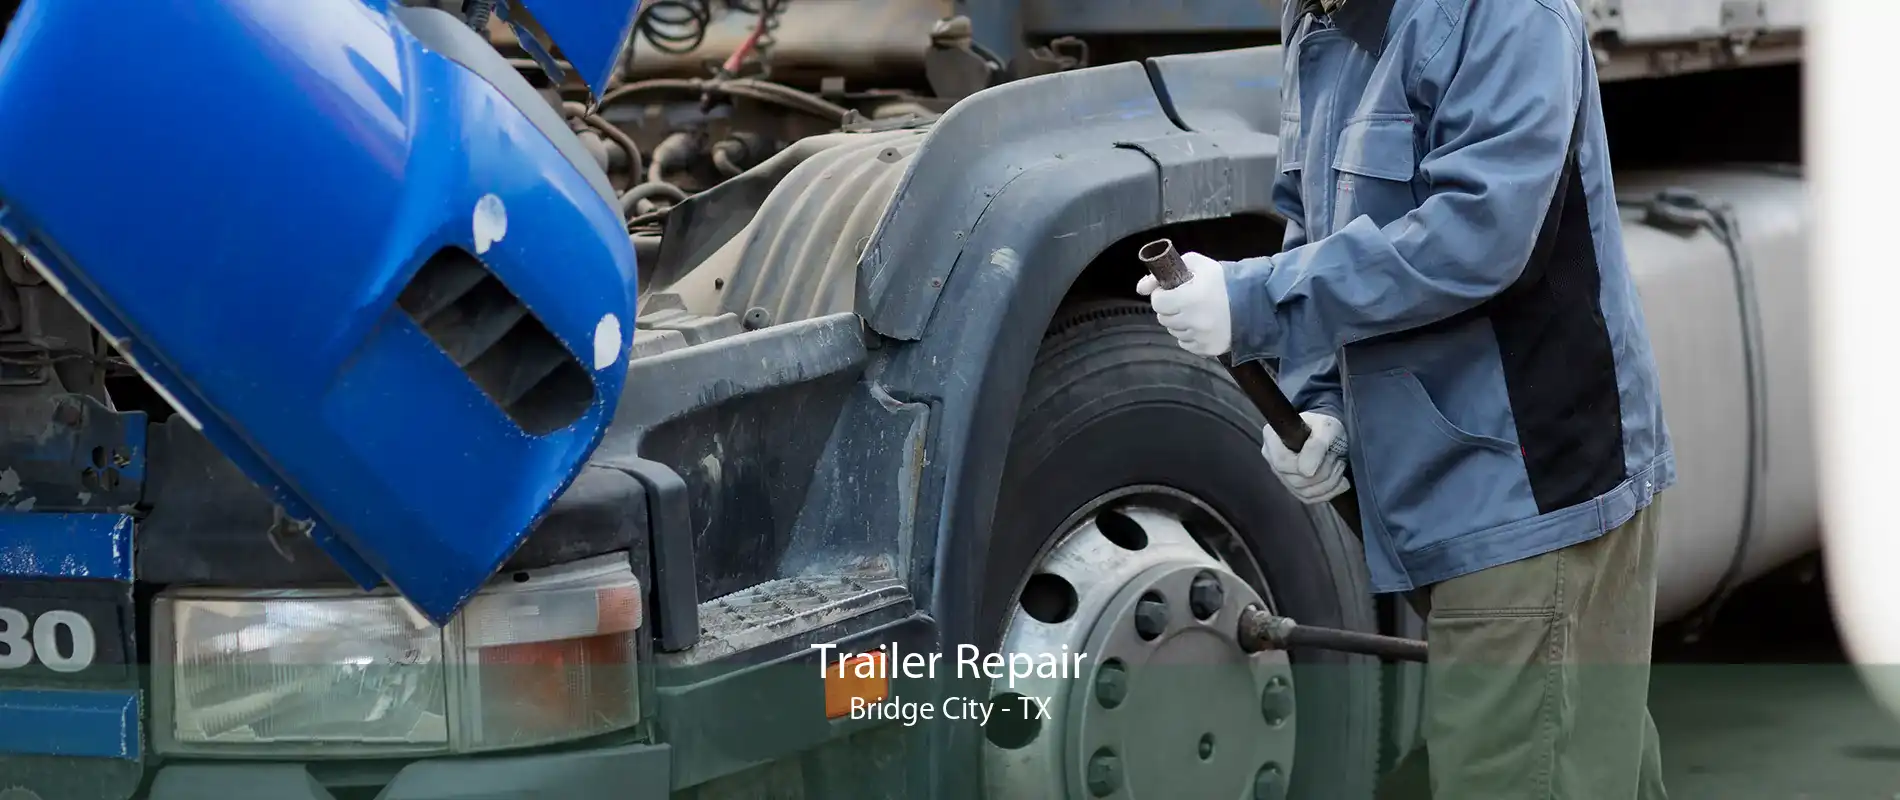 Trailer Repair Bridge City - TX